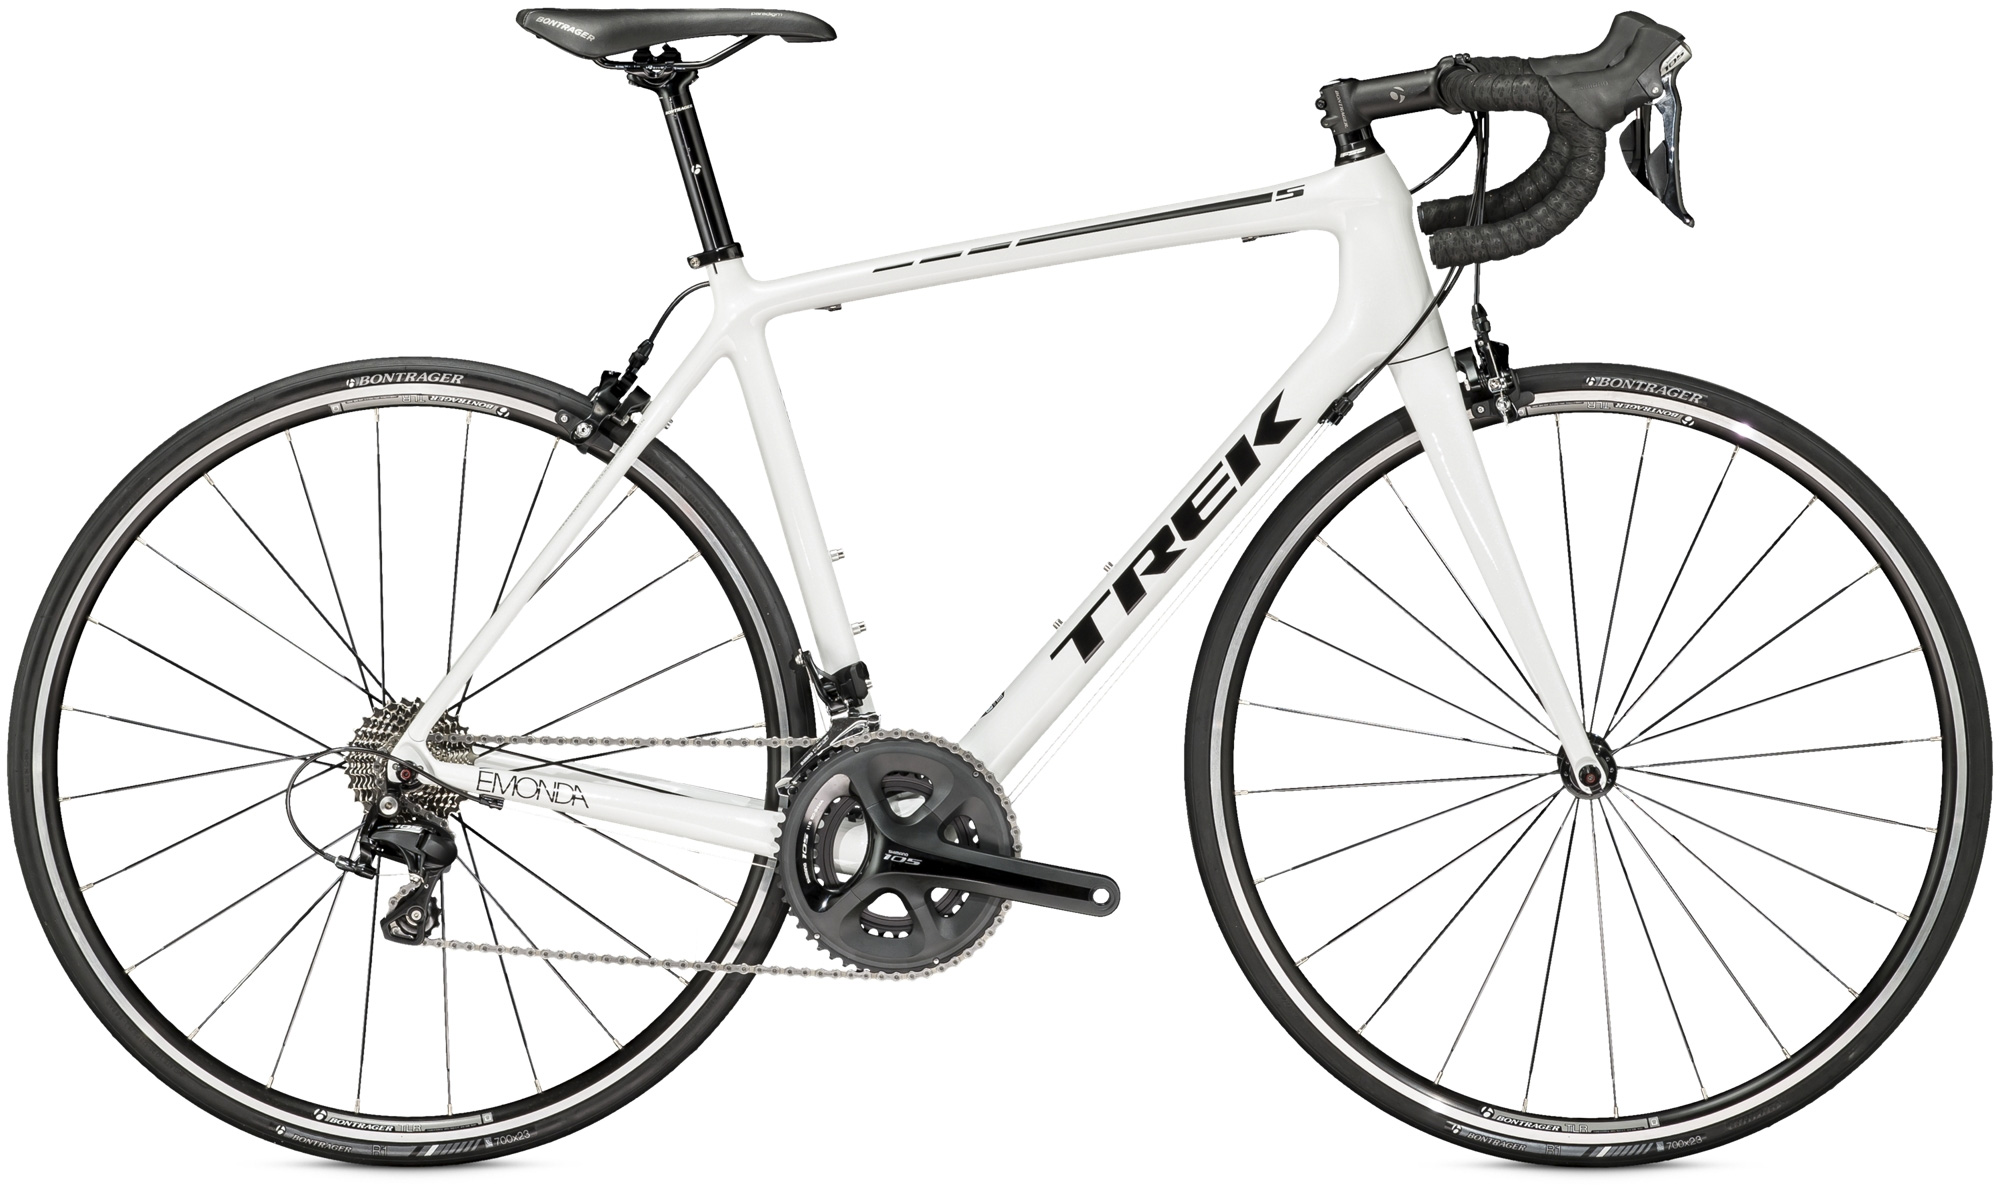 2015 Trek Emonda S 5 - Bicycle Details 